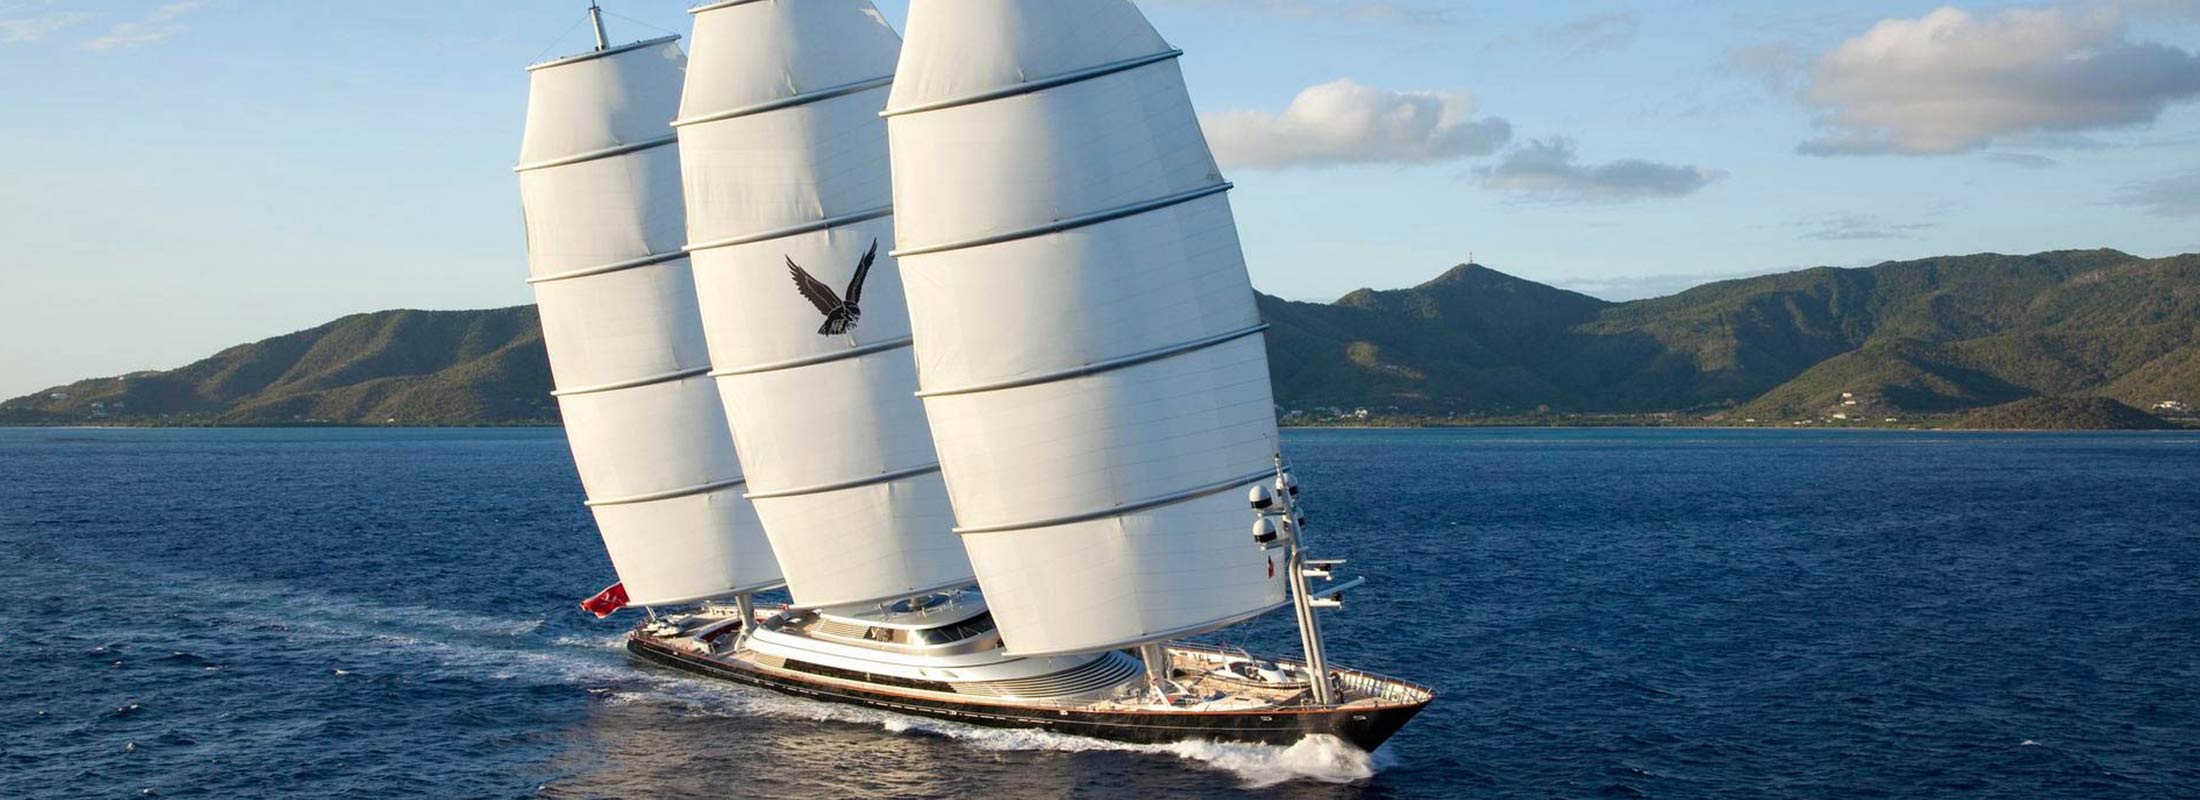 Maltese Falcon Sailing Yacht for Charter Mediterranean slider 1 